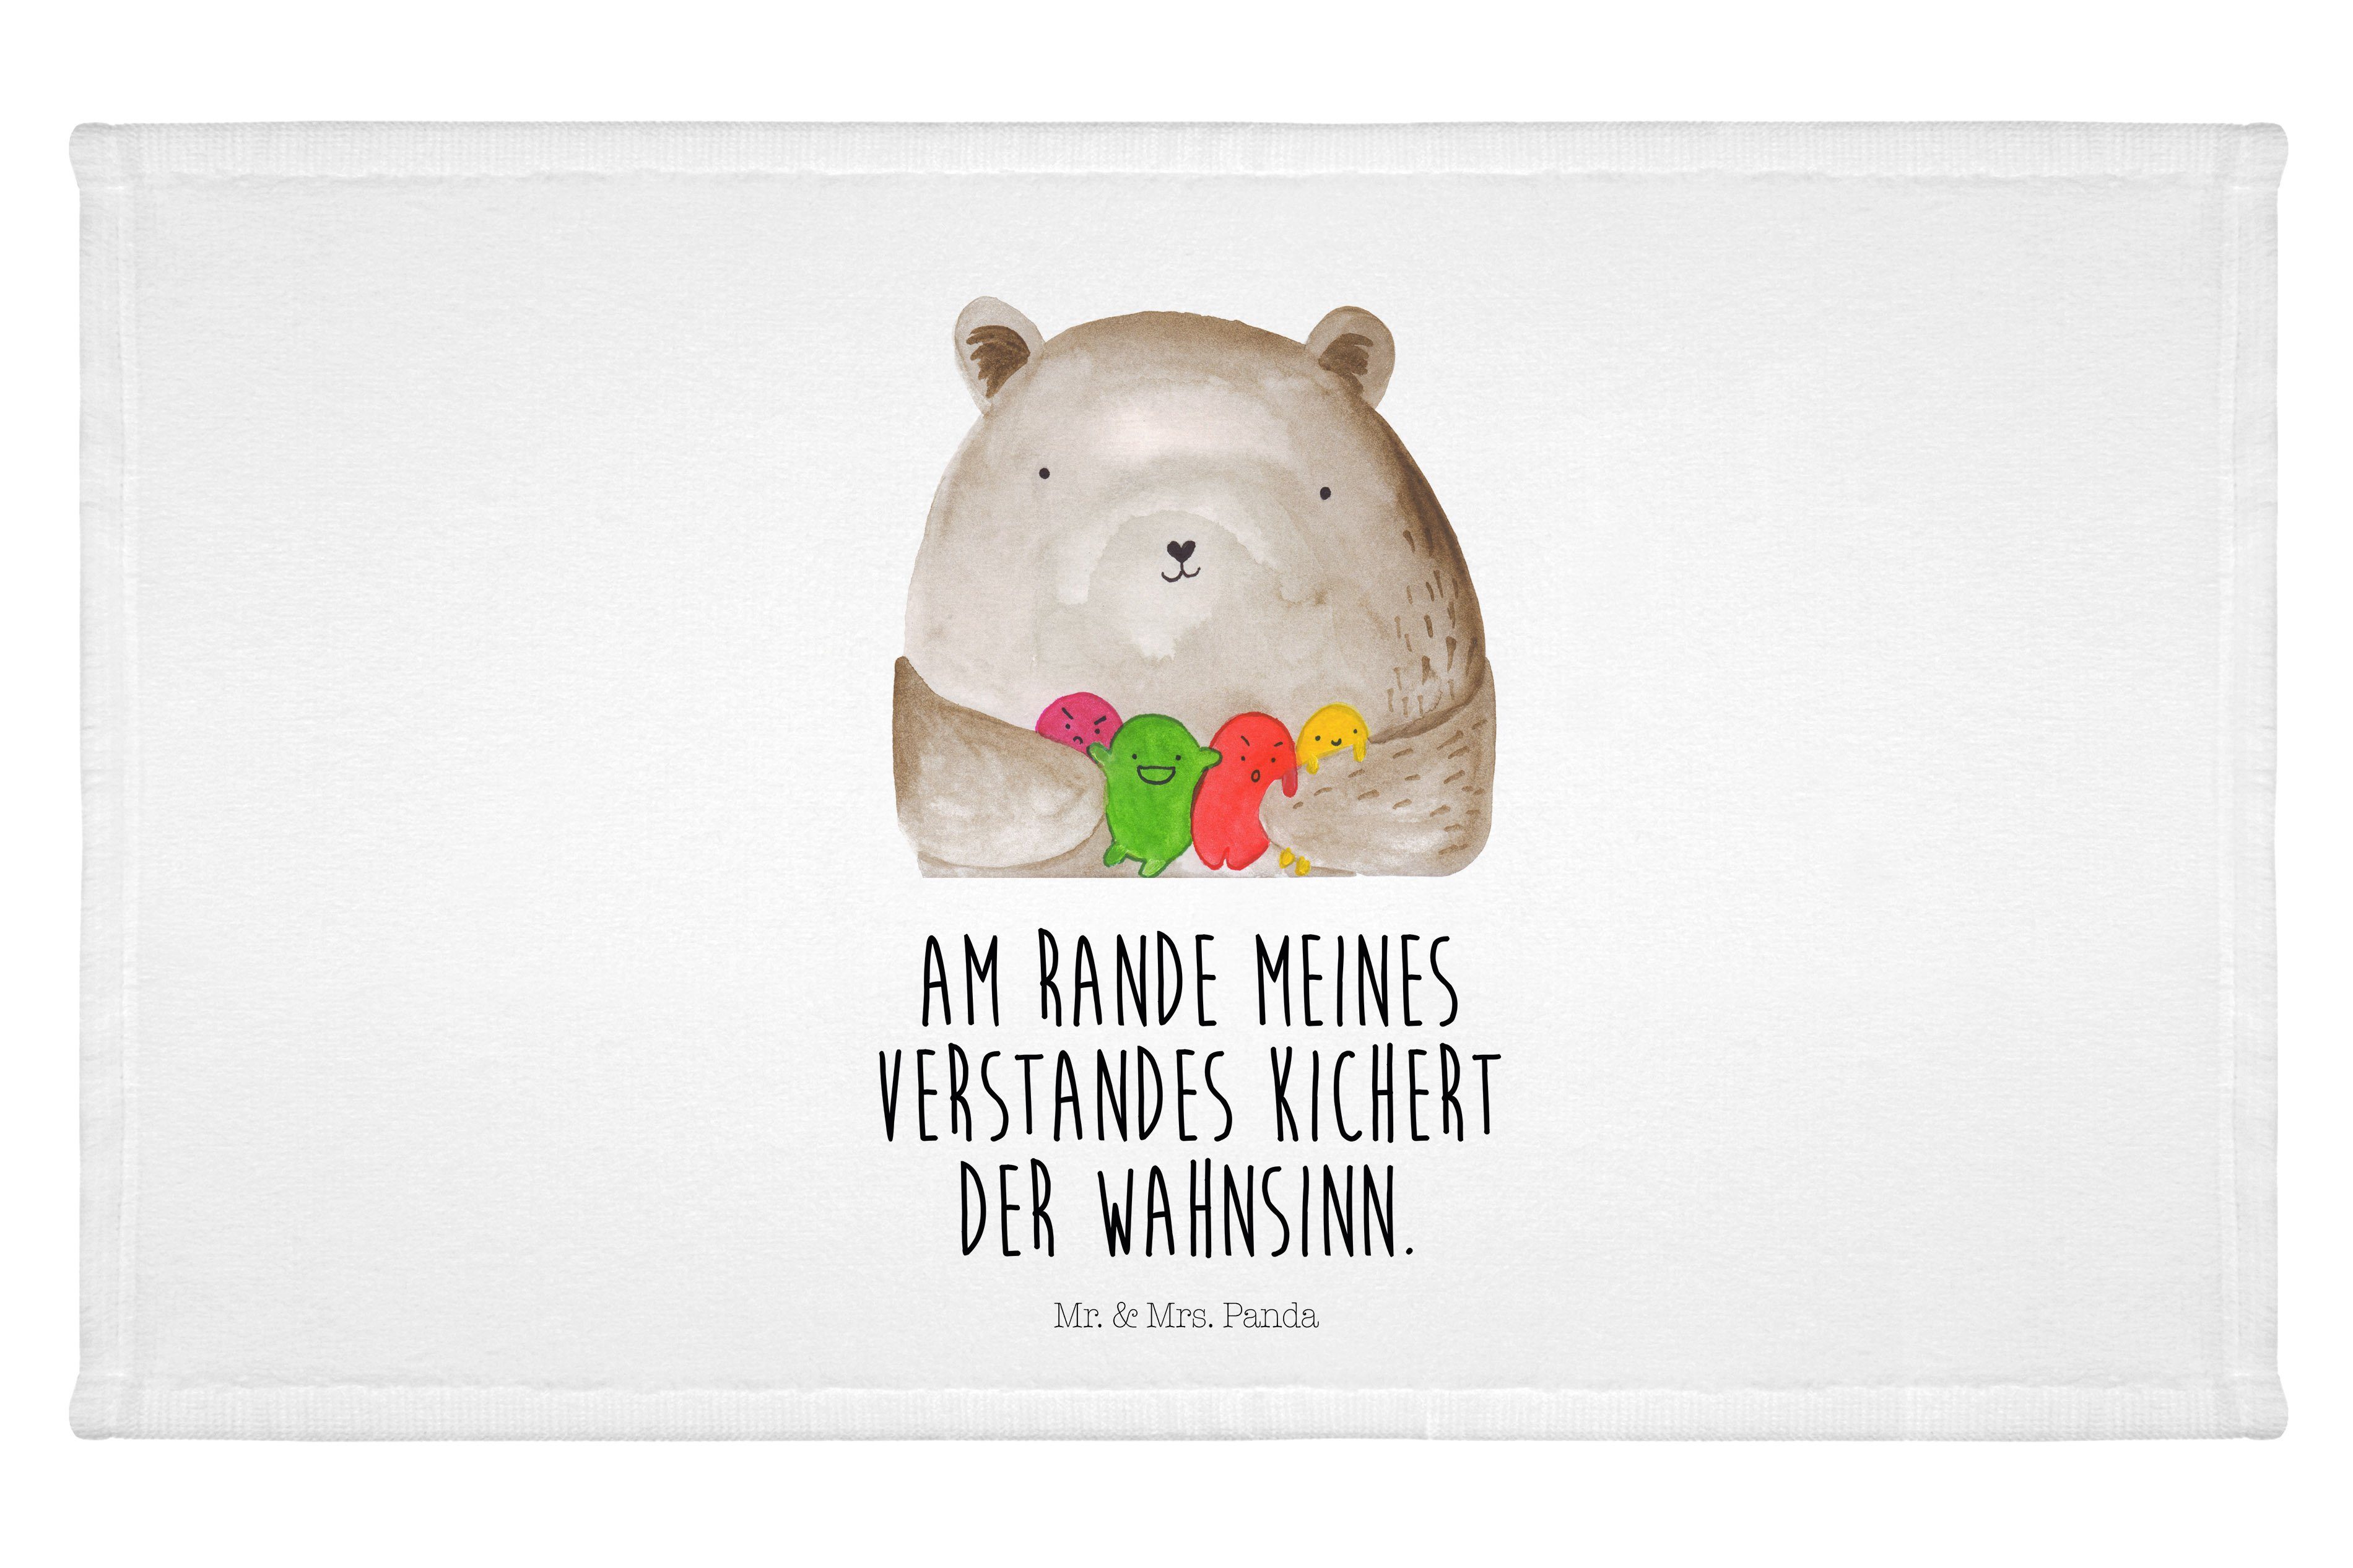 Mr. & Mrs. Panda Handtuch Bär Gefühl - Weiß - Geschenk, Sport Handtuch, Verrückt, Kinder Handtu, (1-St)